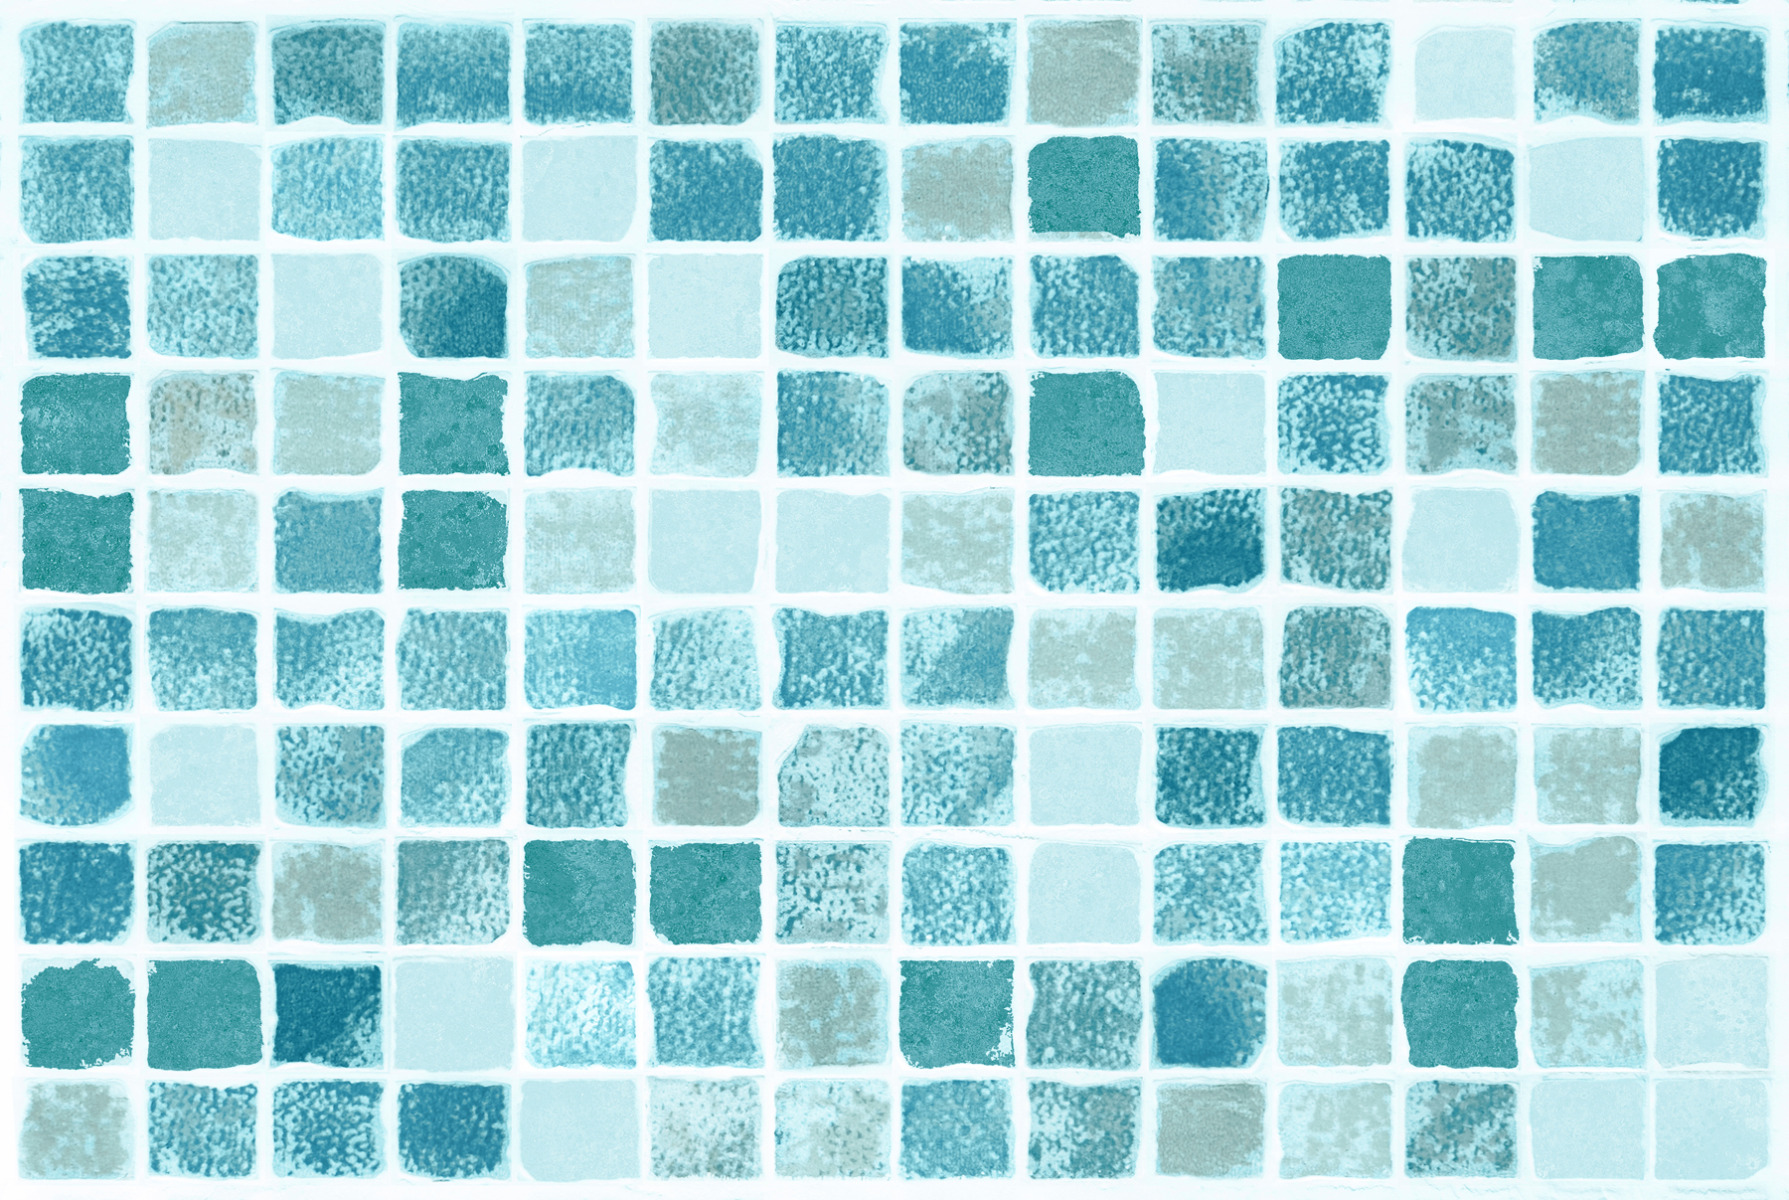 Glass Mosaic Tiles for Bathroom Tiles, Kitchen Tiles, Accent Tiles